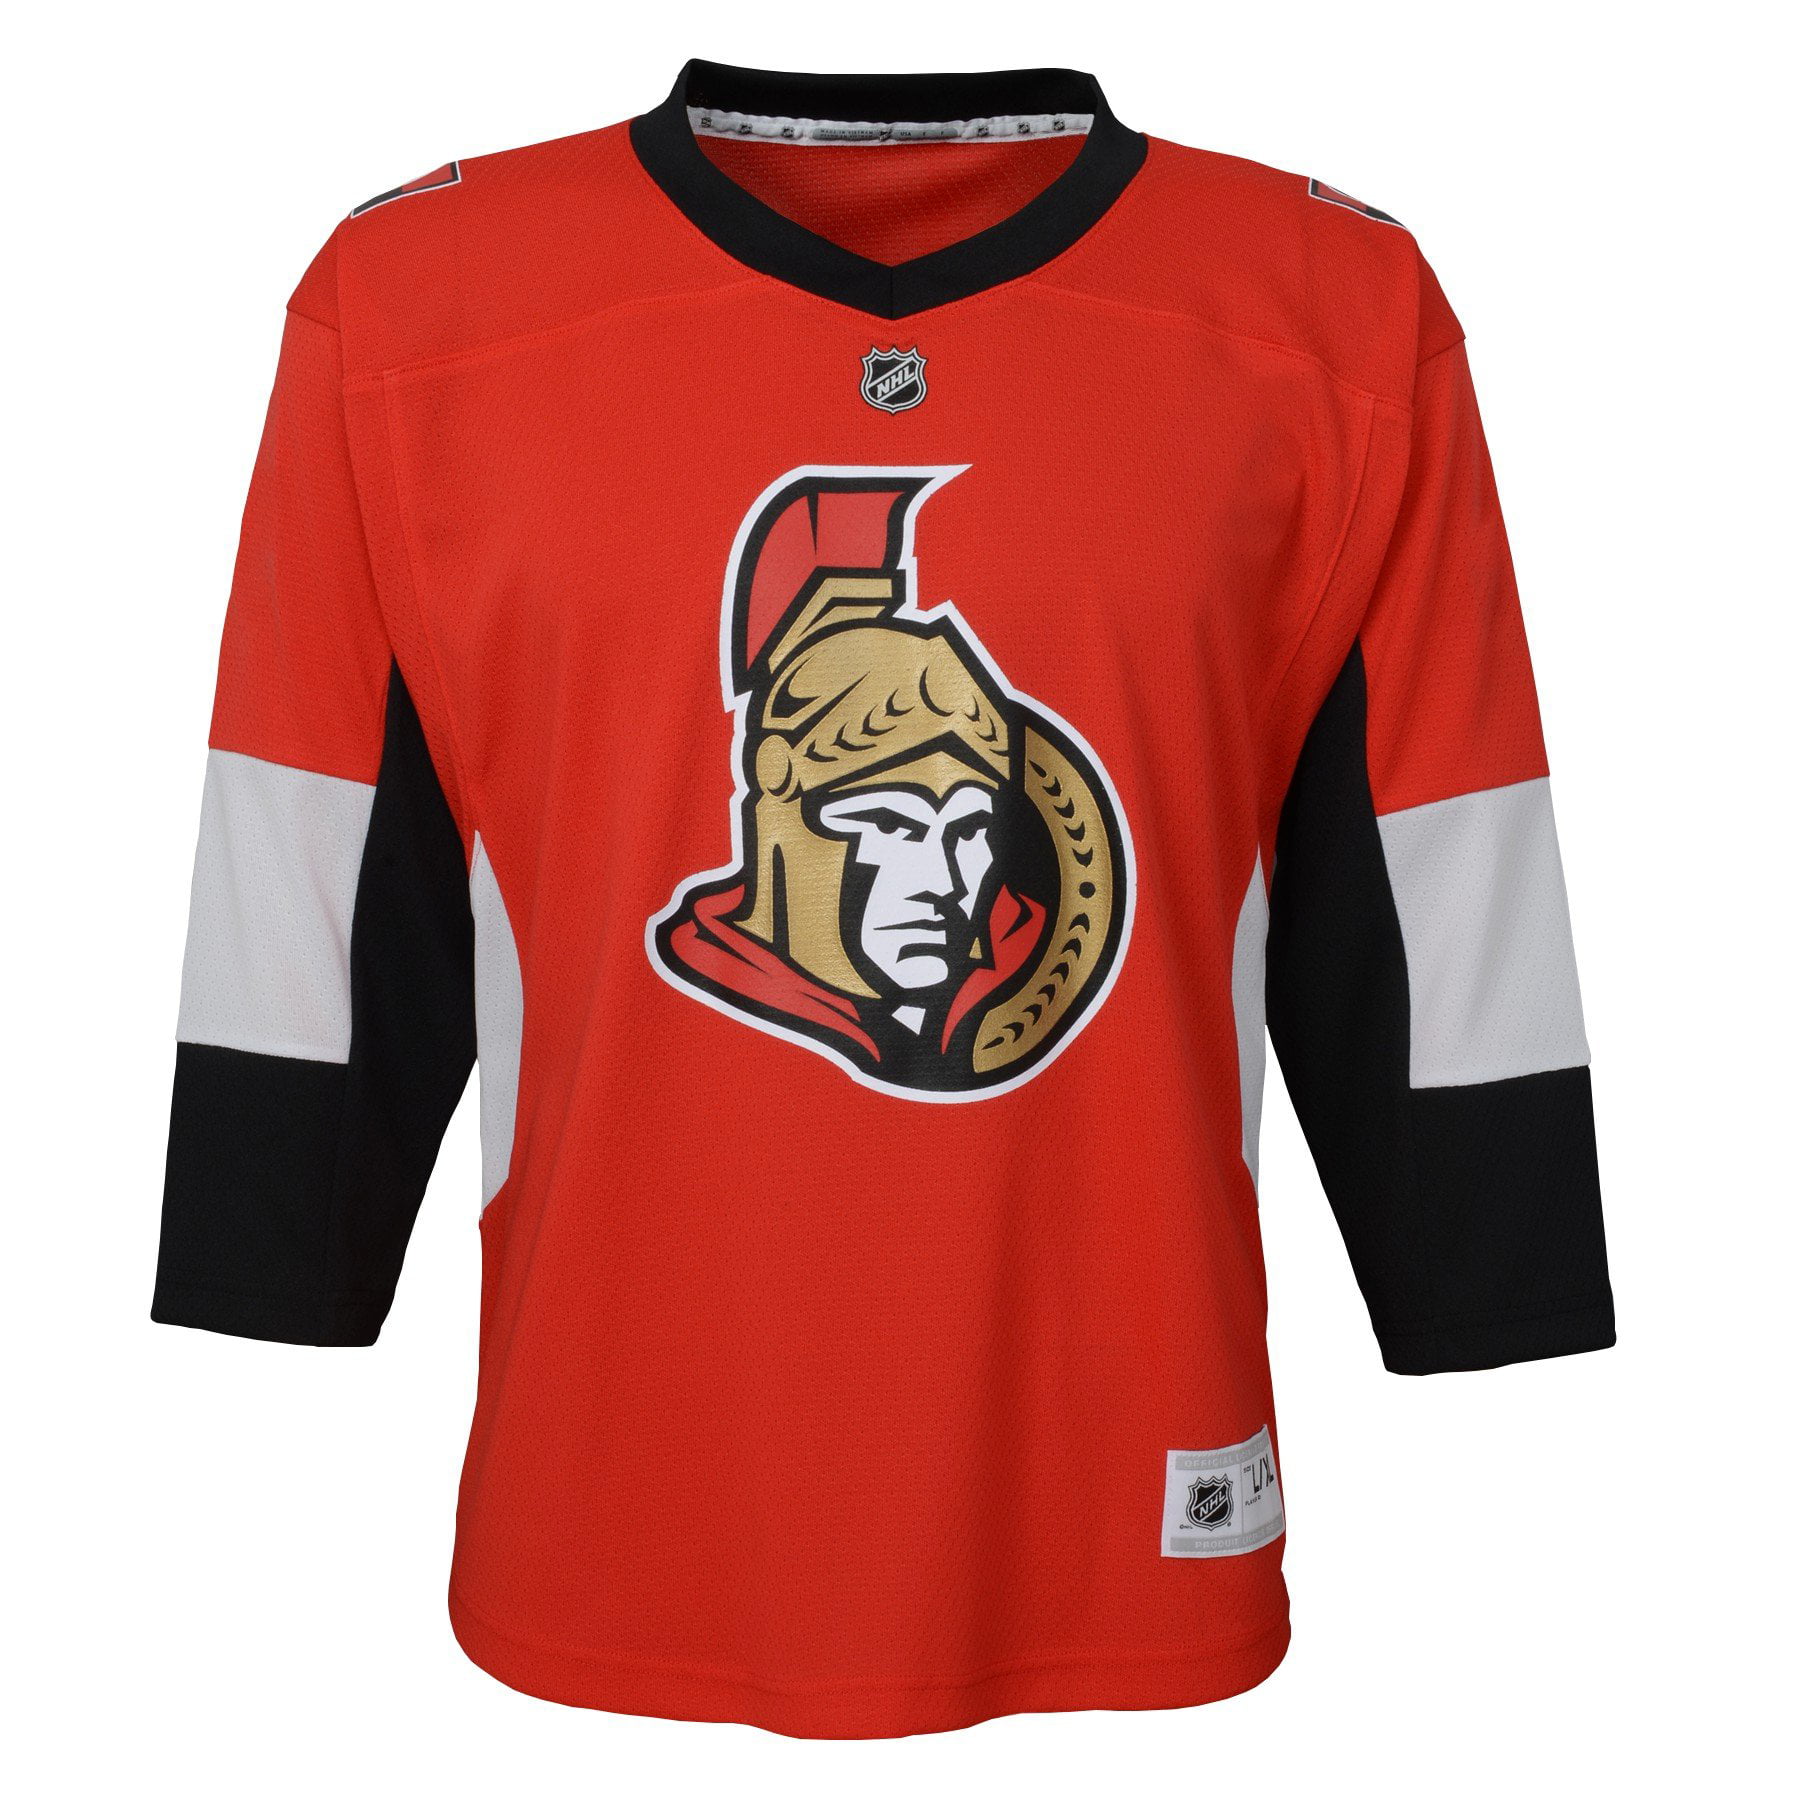 Ottawa Senators Merchandise, Jerseys, Apparel, Clothing